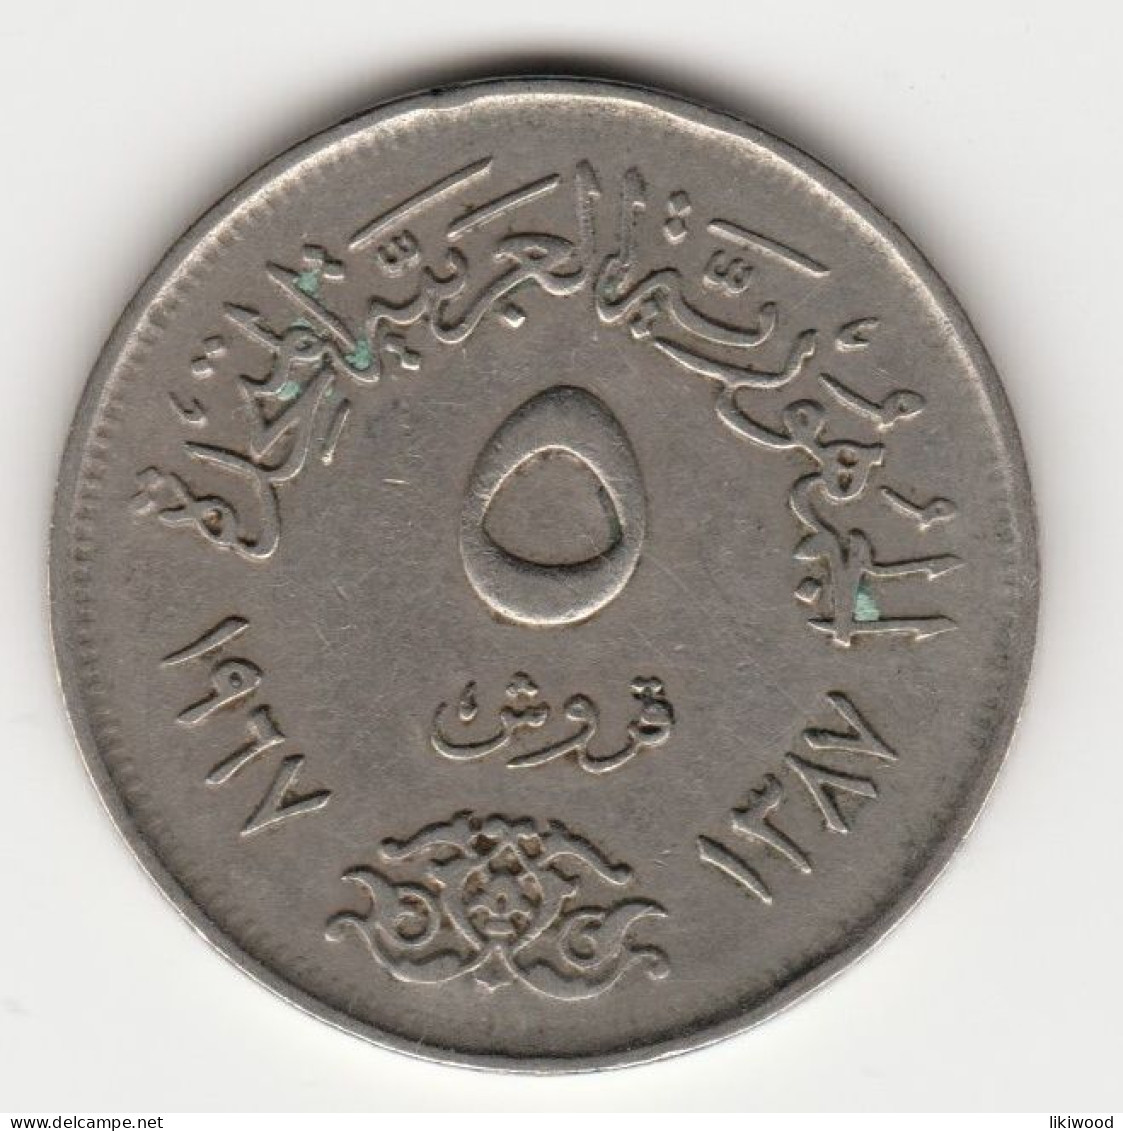 5 Qirsh - 1967 - Egypt - United Arab Republic - Egypt